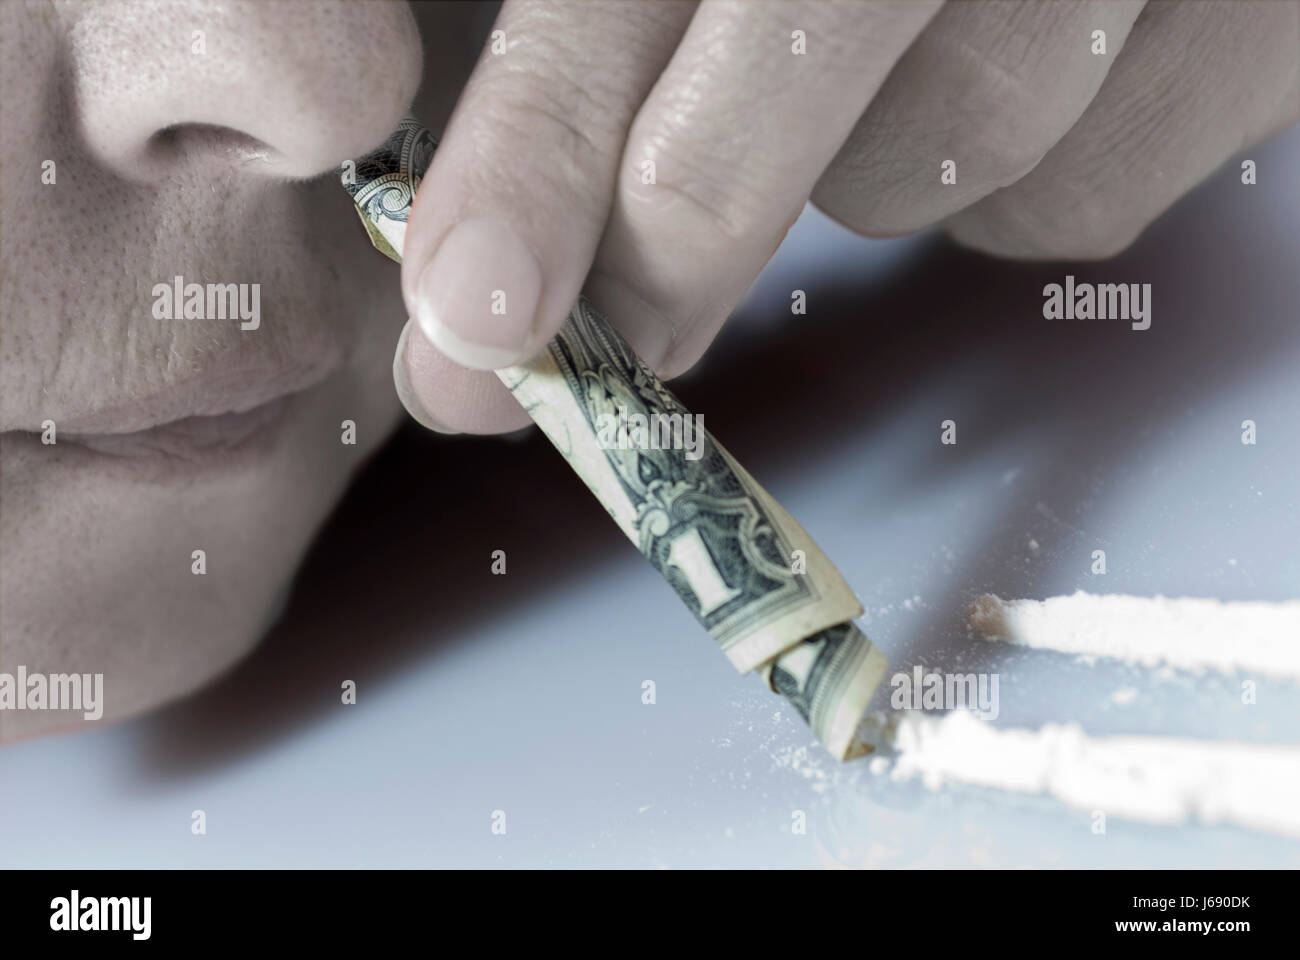 snow coke cocaine material drug anaesthetic addictive drug drugs addiction Stock Photo